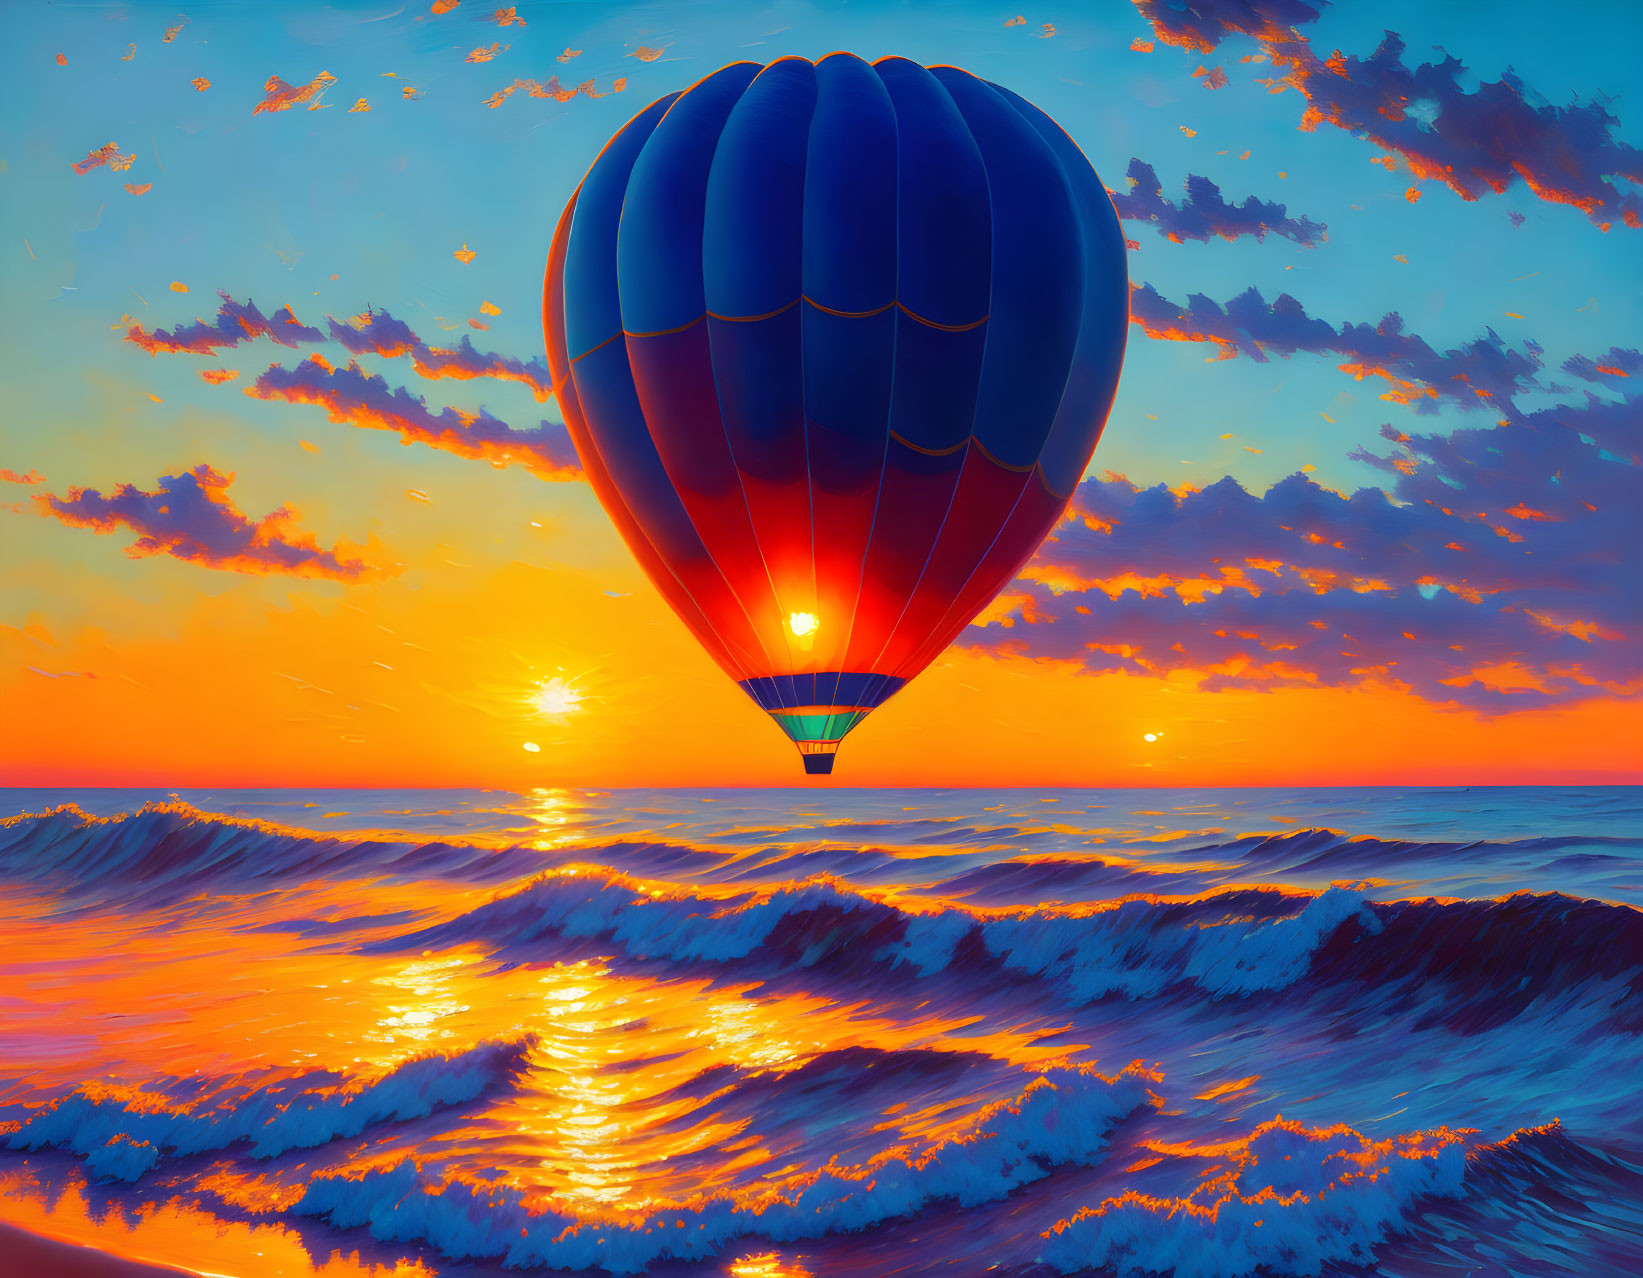 Hot air balloon over serene sea at sunset with crashing waves